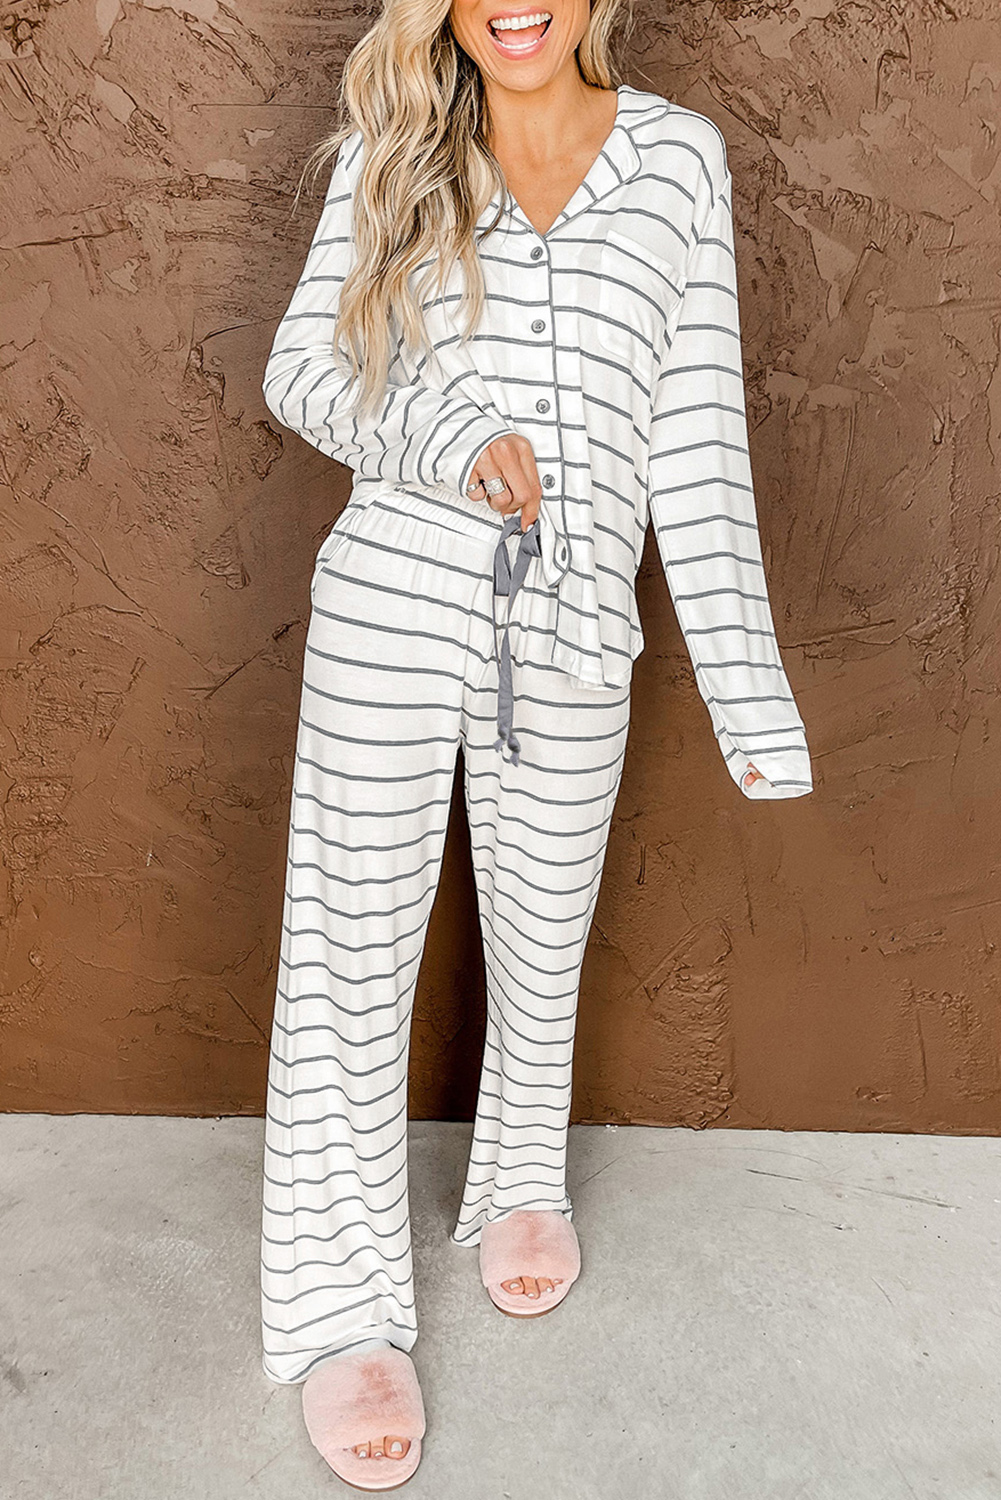 Shewin Wholesale Southern Clothes White Striped Print Long Sleeve Top & Drawstring Pants PAJAMAS Set